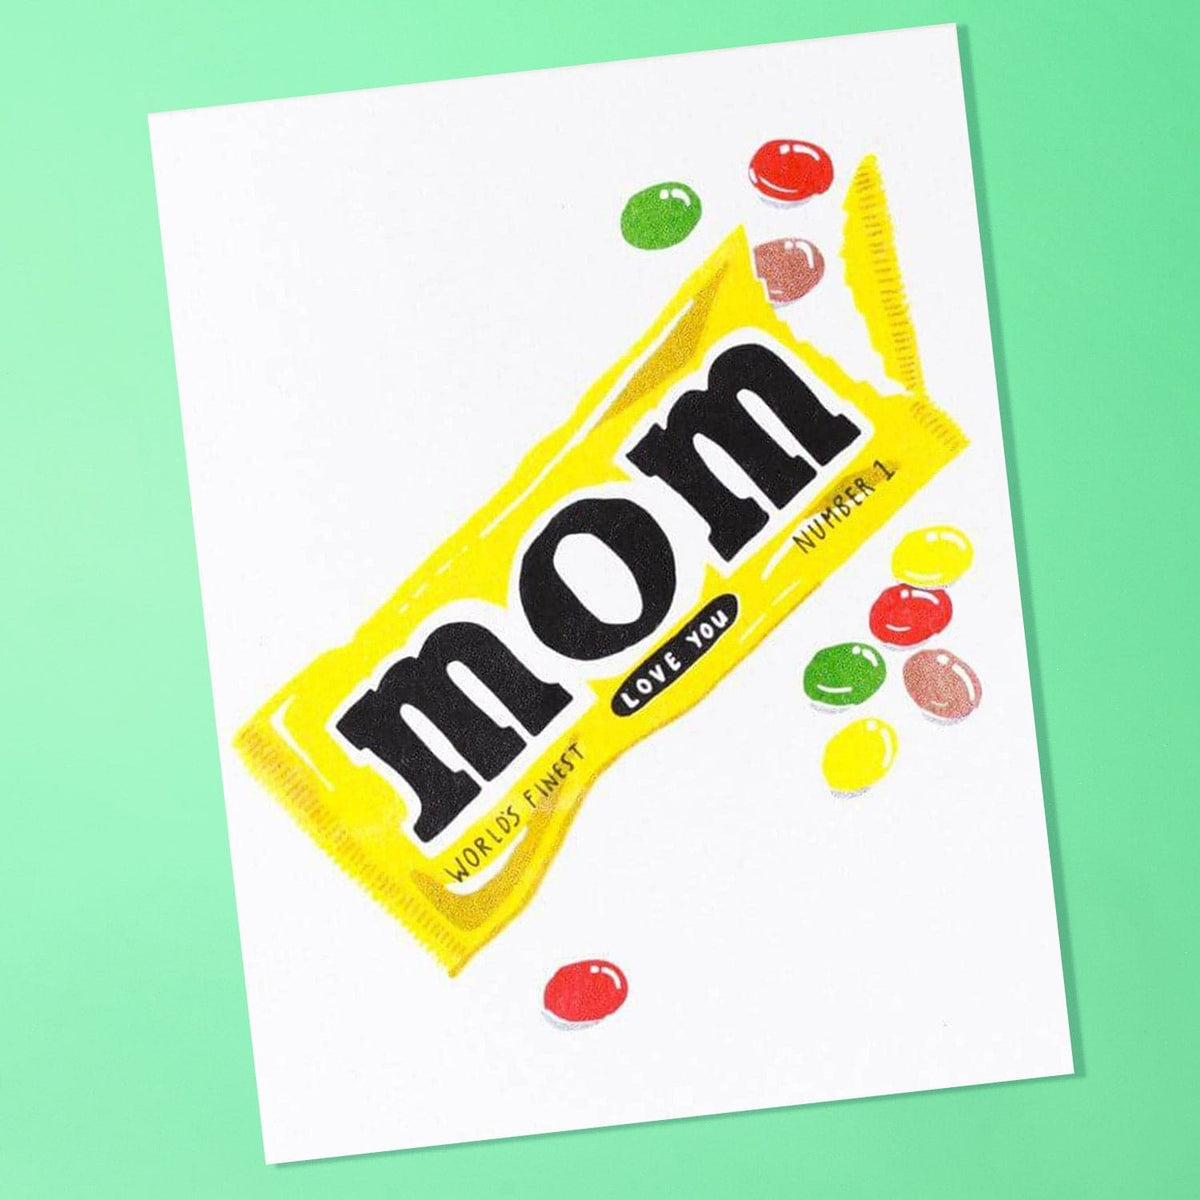 Love you Mom - Risograph Greeting Card Greeting Card - 